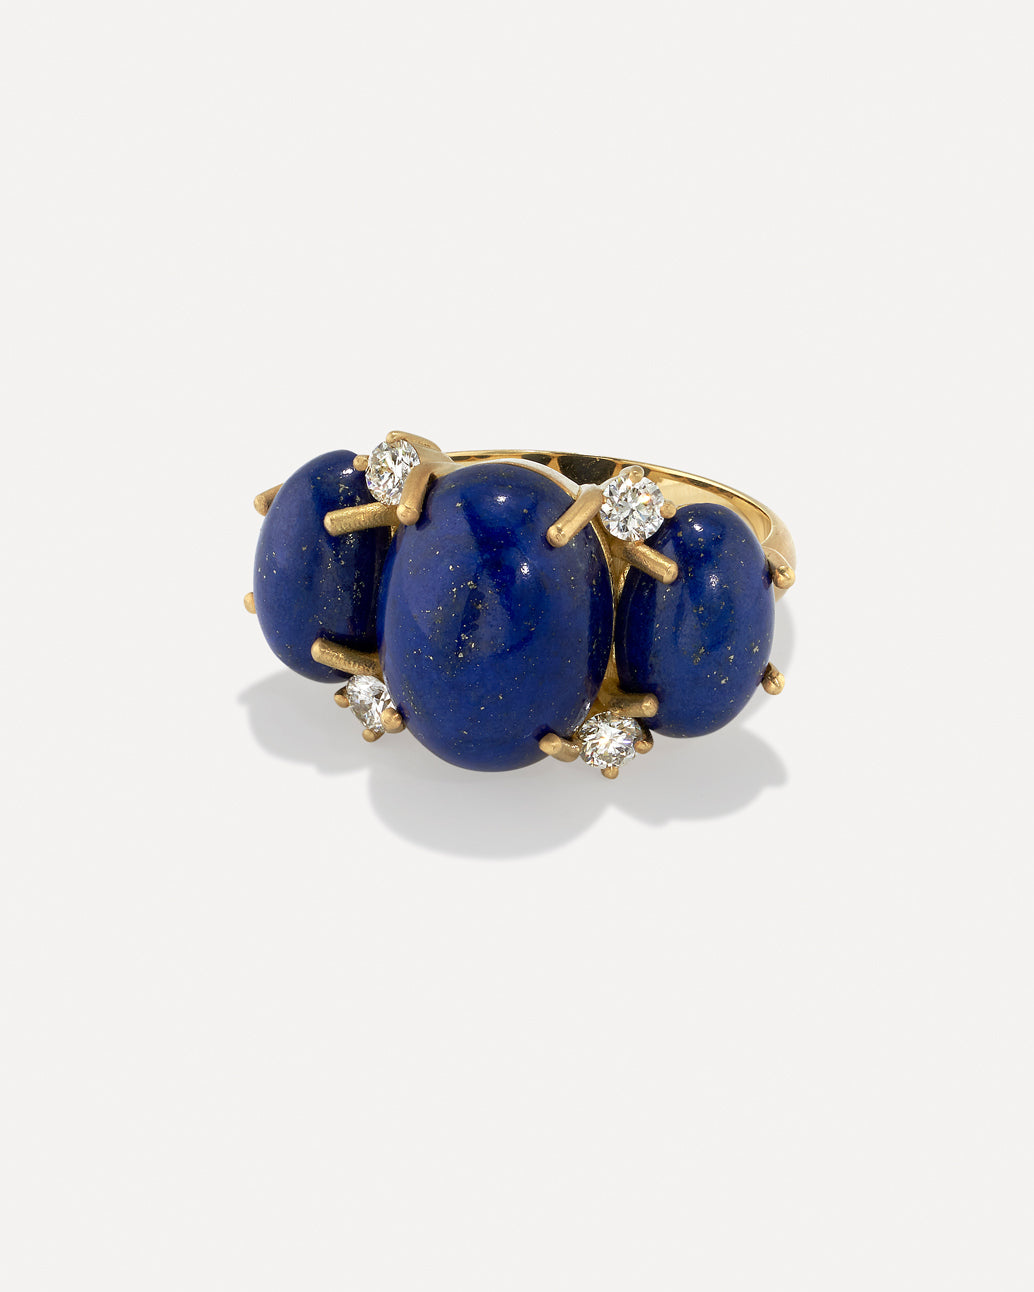 Divya Shakti Blue Sapphire / Nilam / Neelam Gemstone 22k Pure Gold Ring  Natural AAA Quality For Women - Divya Shakti Online